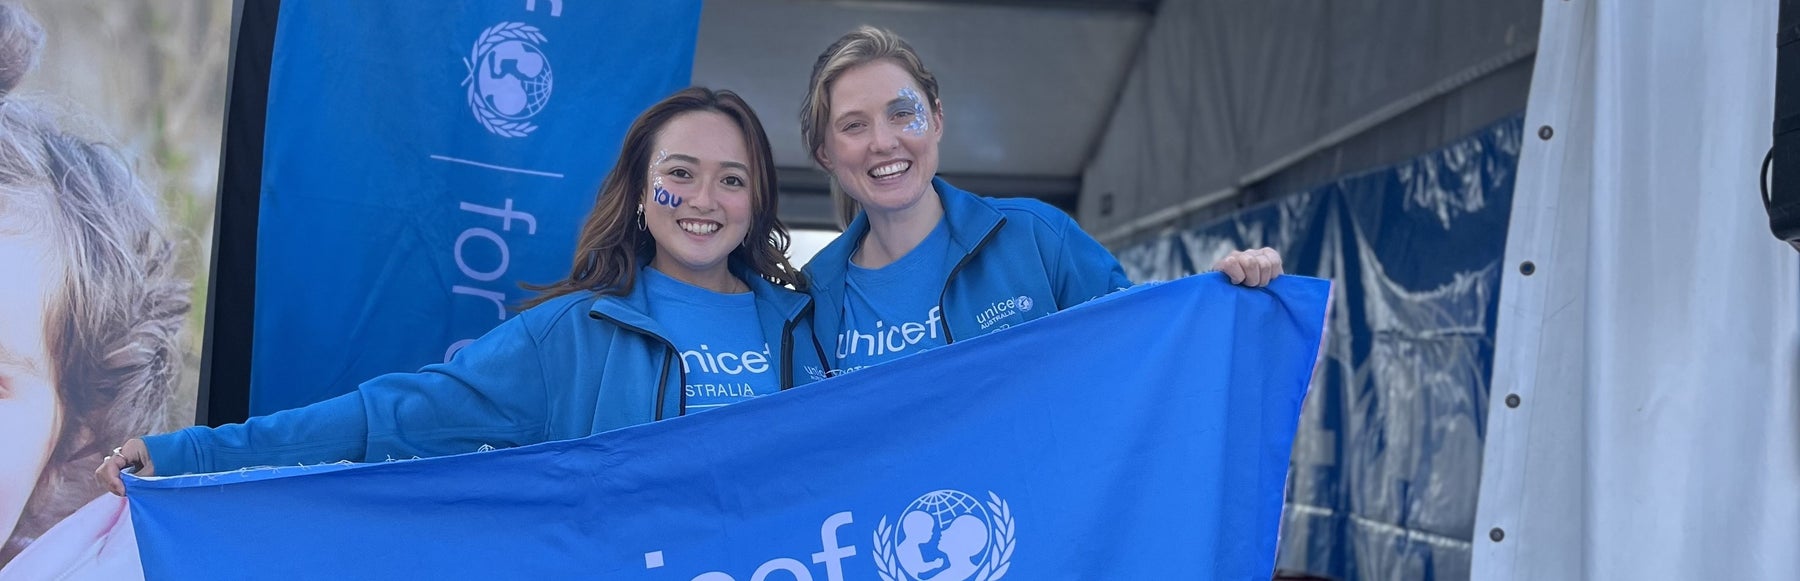 UNICEF Australia's community fundraising team